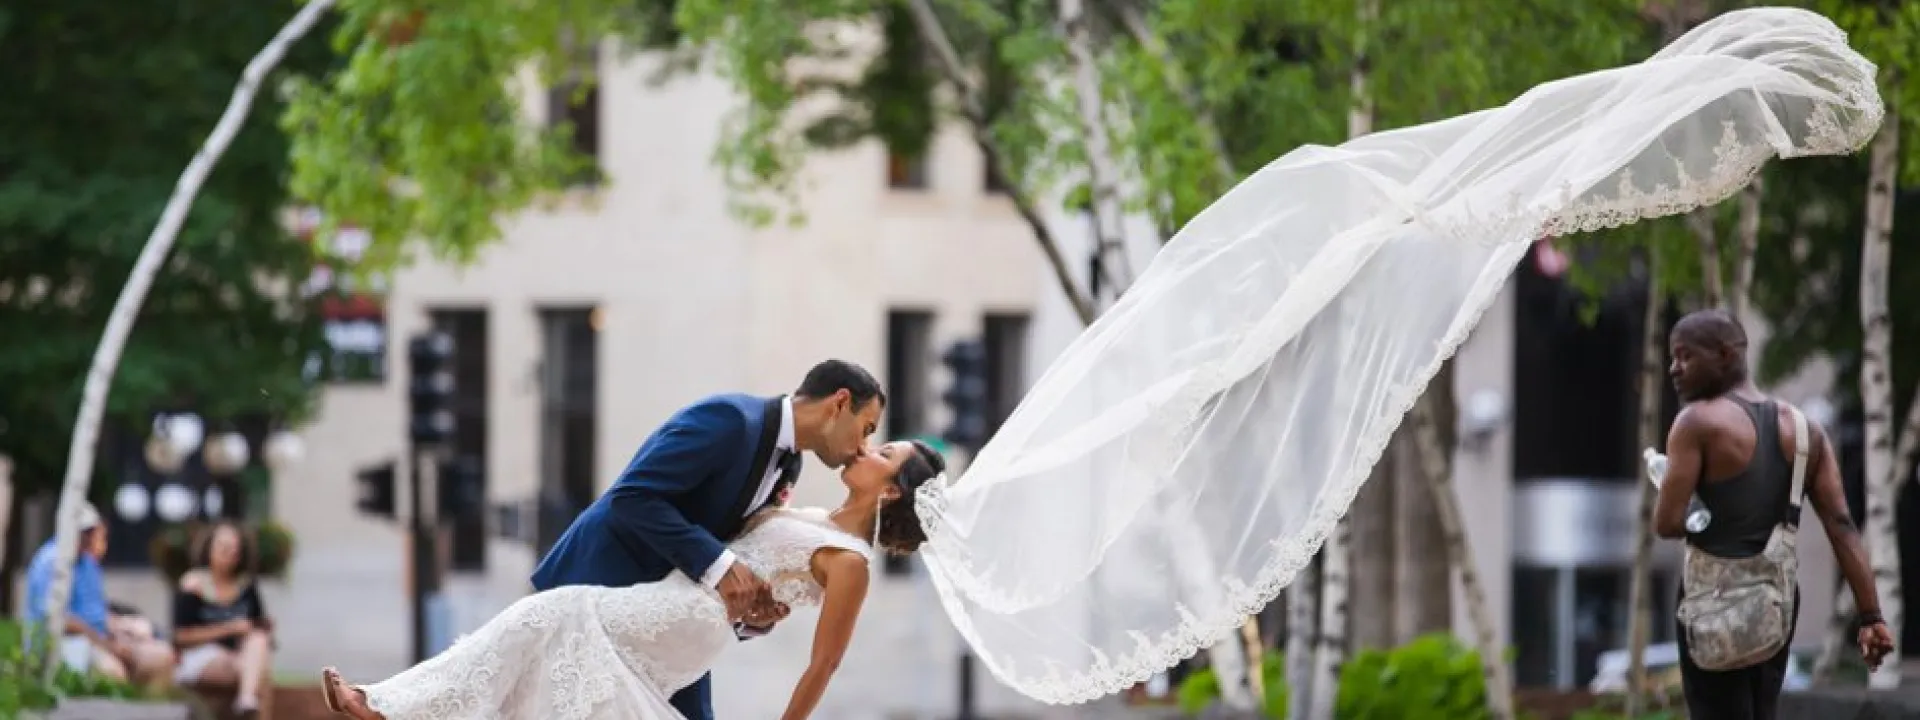 Two-Day Wedding Celebration at The Landmark Center & A’bulae | Minnesota Bride